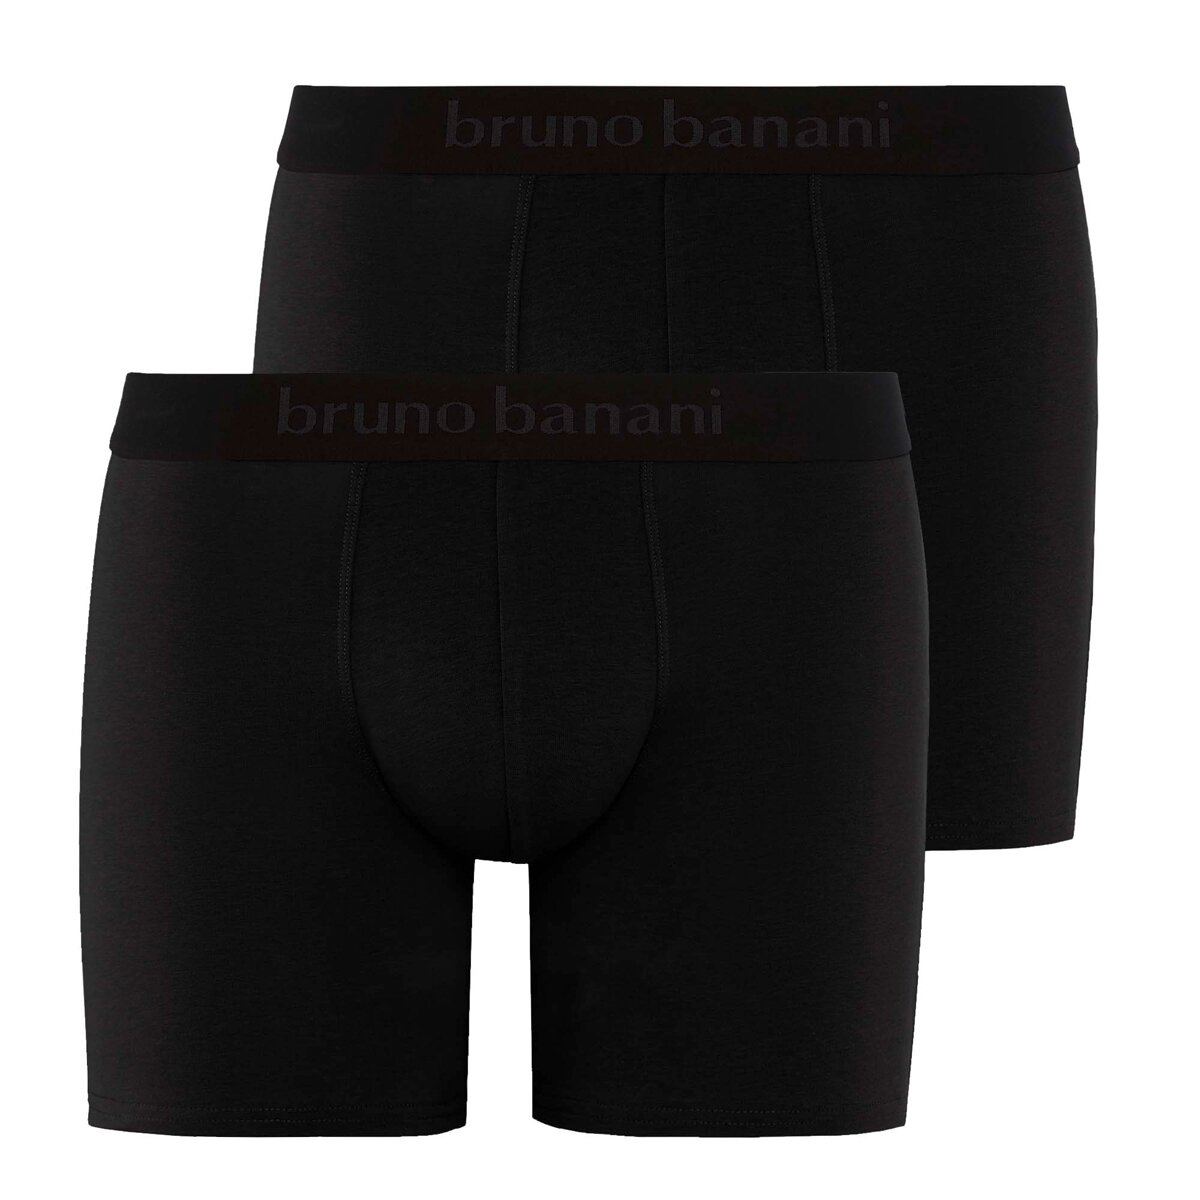 Bruno Banani Herren Shorts, 2er Pack - Long Shorts, 28,95 €